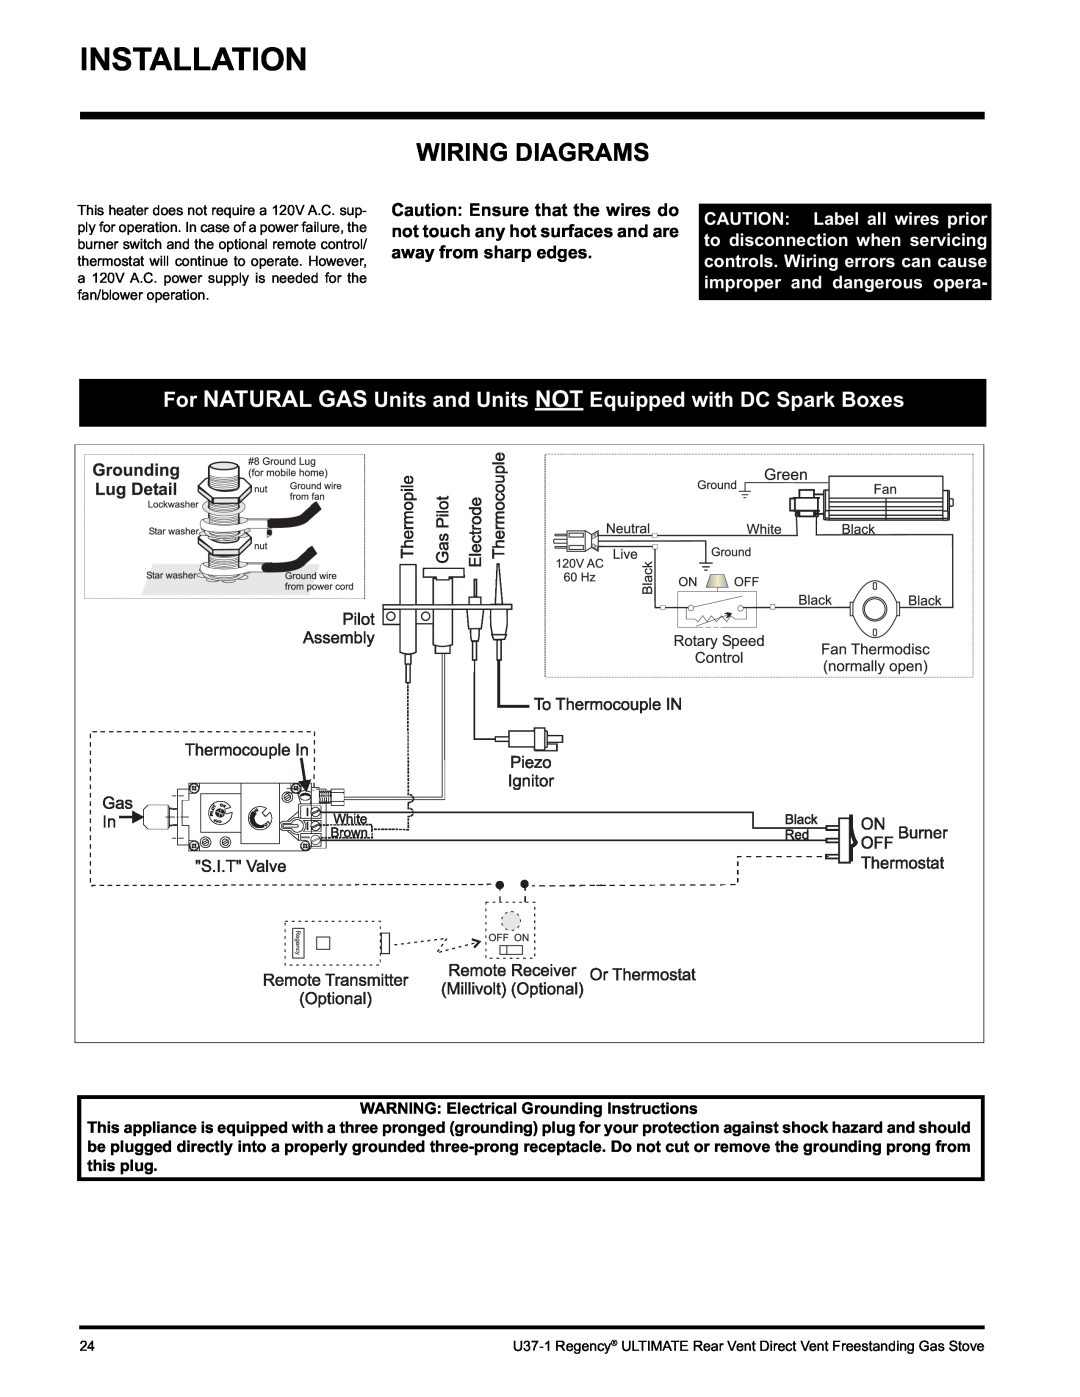 Regency U37-LP1, U37-NG1 installation manual Installation, Wiring Diagrams, WARNING Electrical Grounding Instructions 